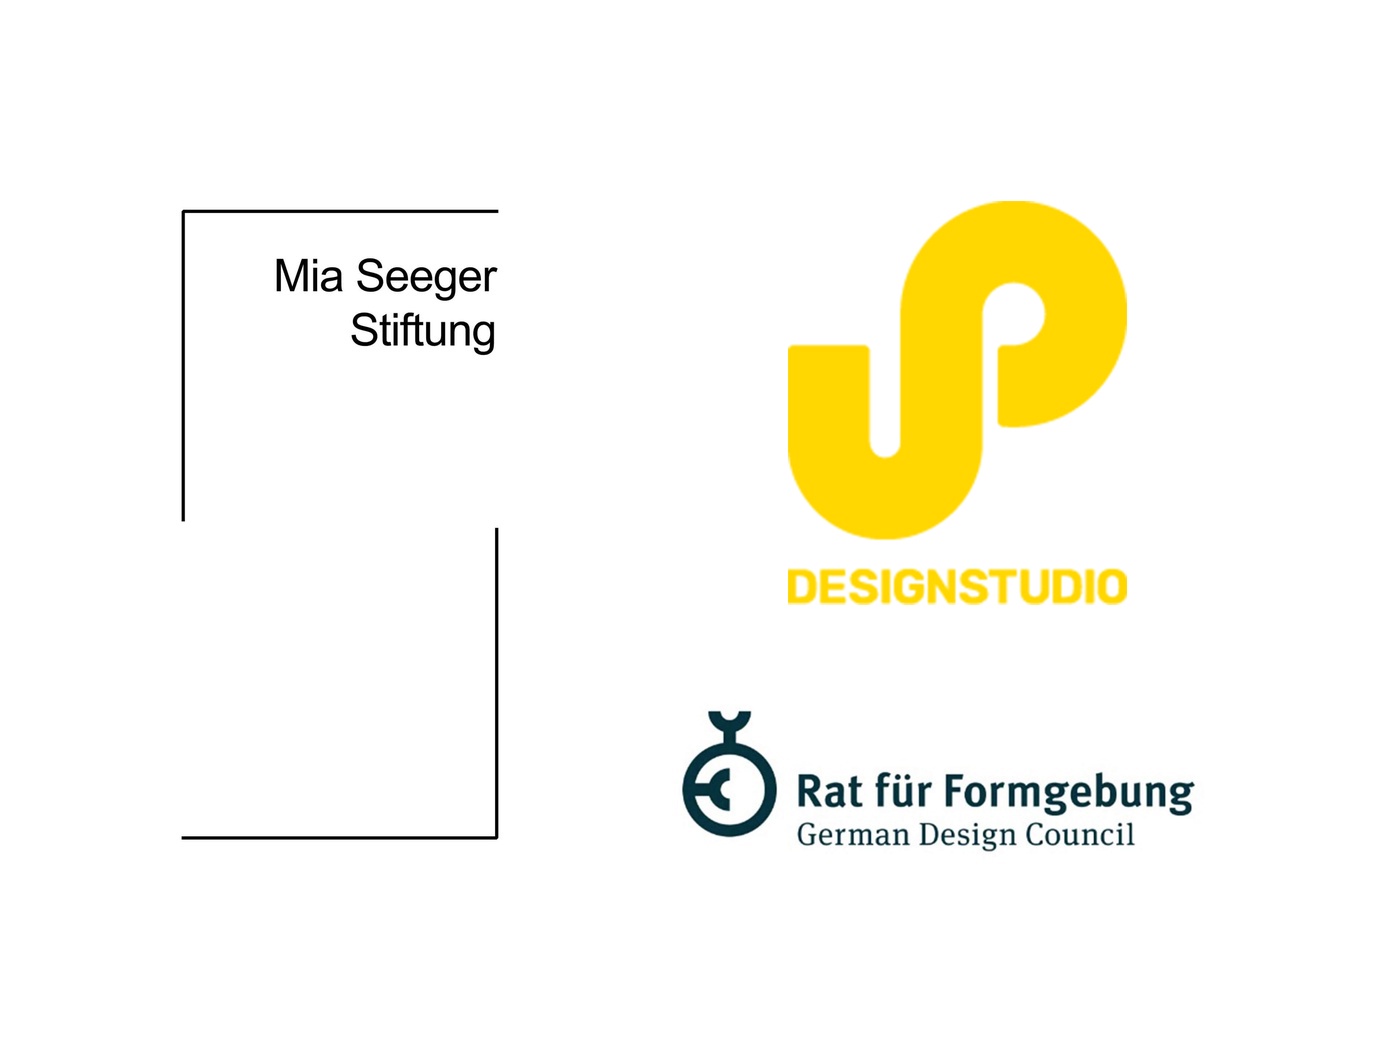 Mia Seeger Logo, Up Design Center Logo, Rat für Formgebung Logo